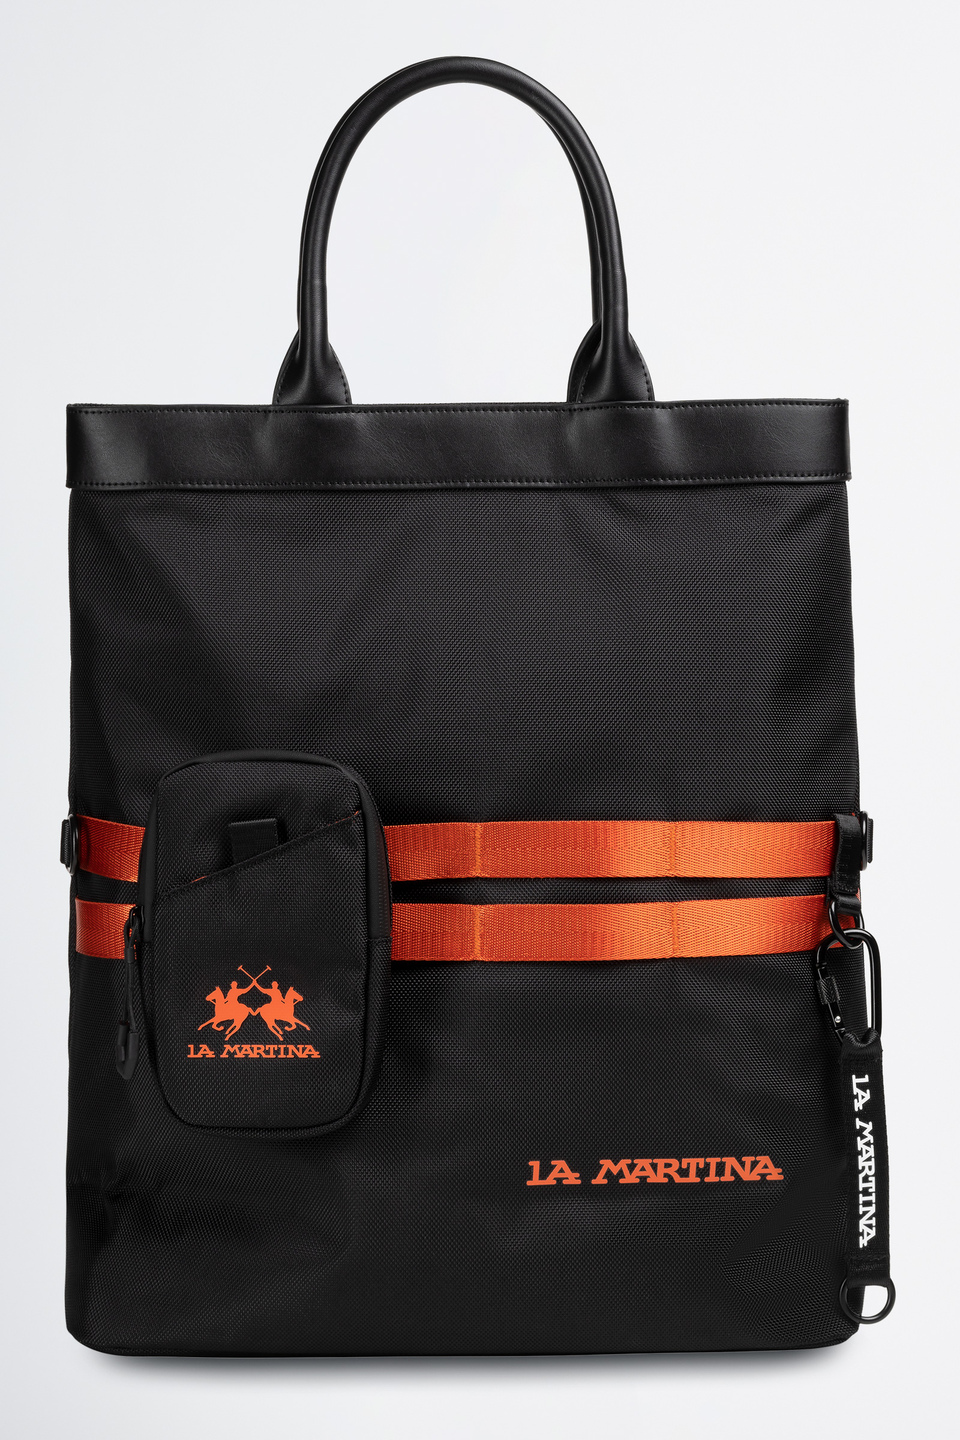 Herren Tasche aus synthetischem Gewebe | La Martina - Official Online Shop